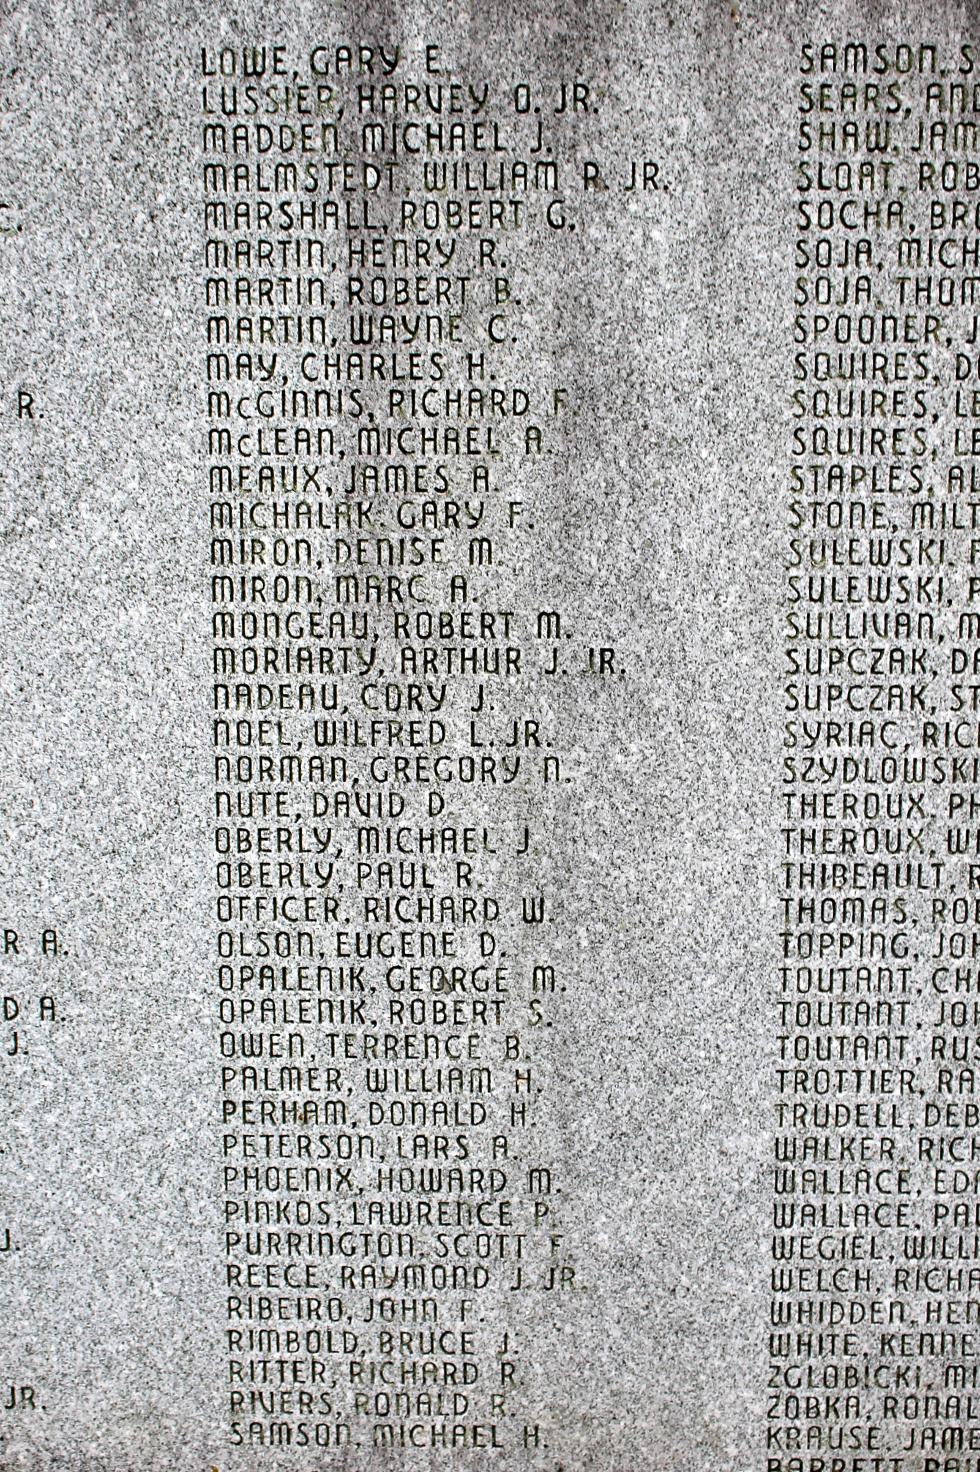 Belchertown Massachusetts Vietnam War Veterans Memorial